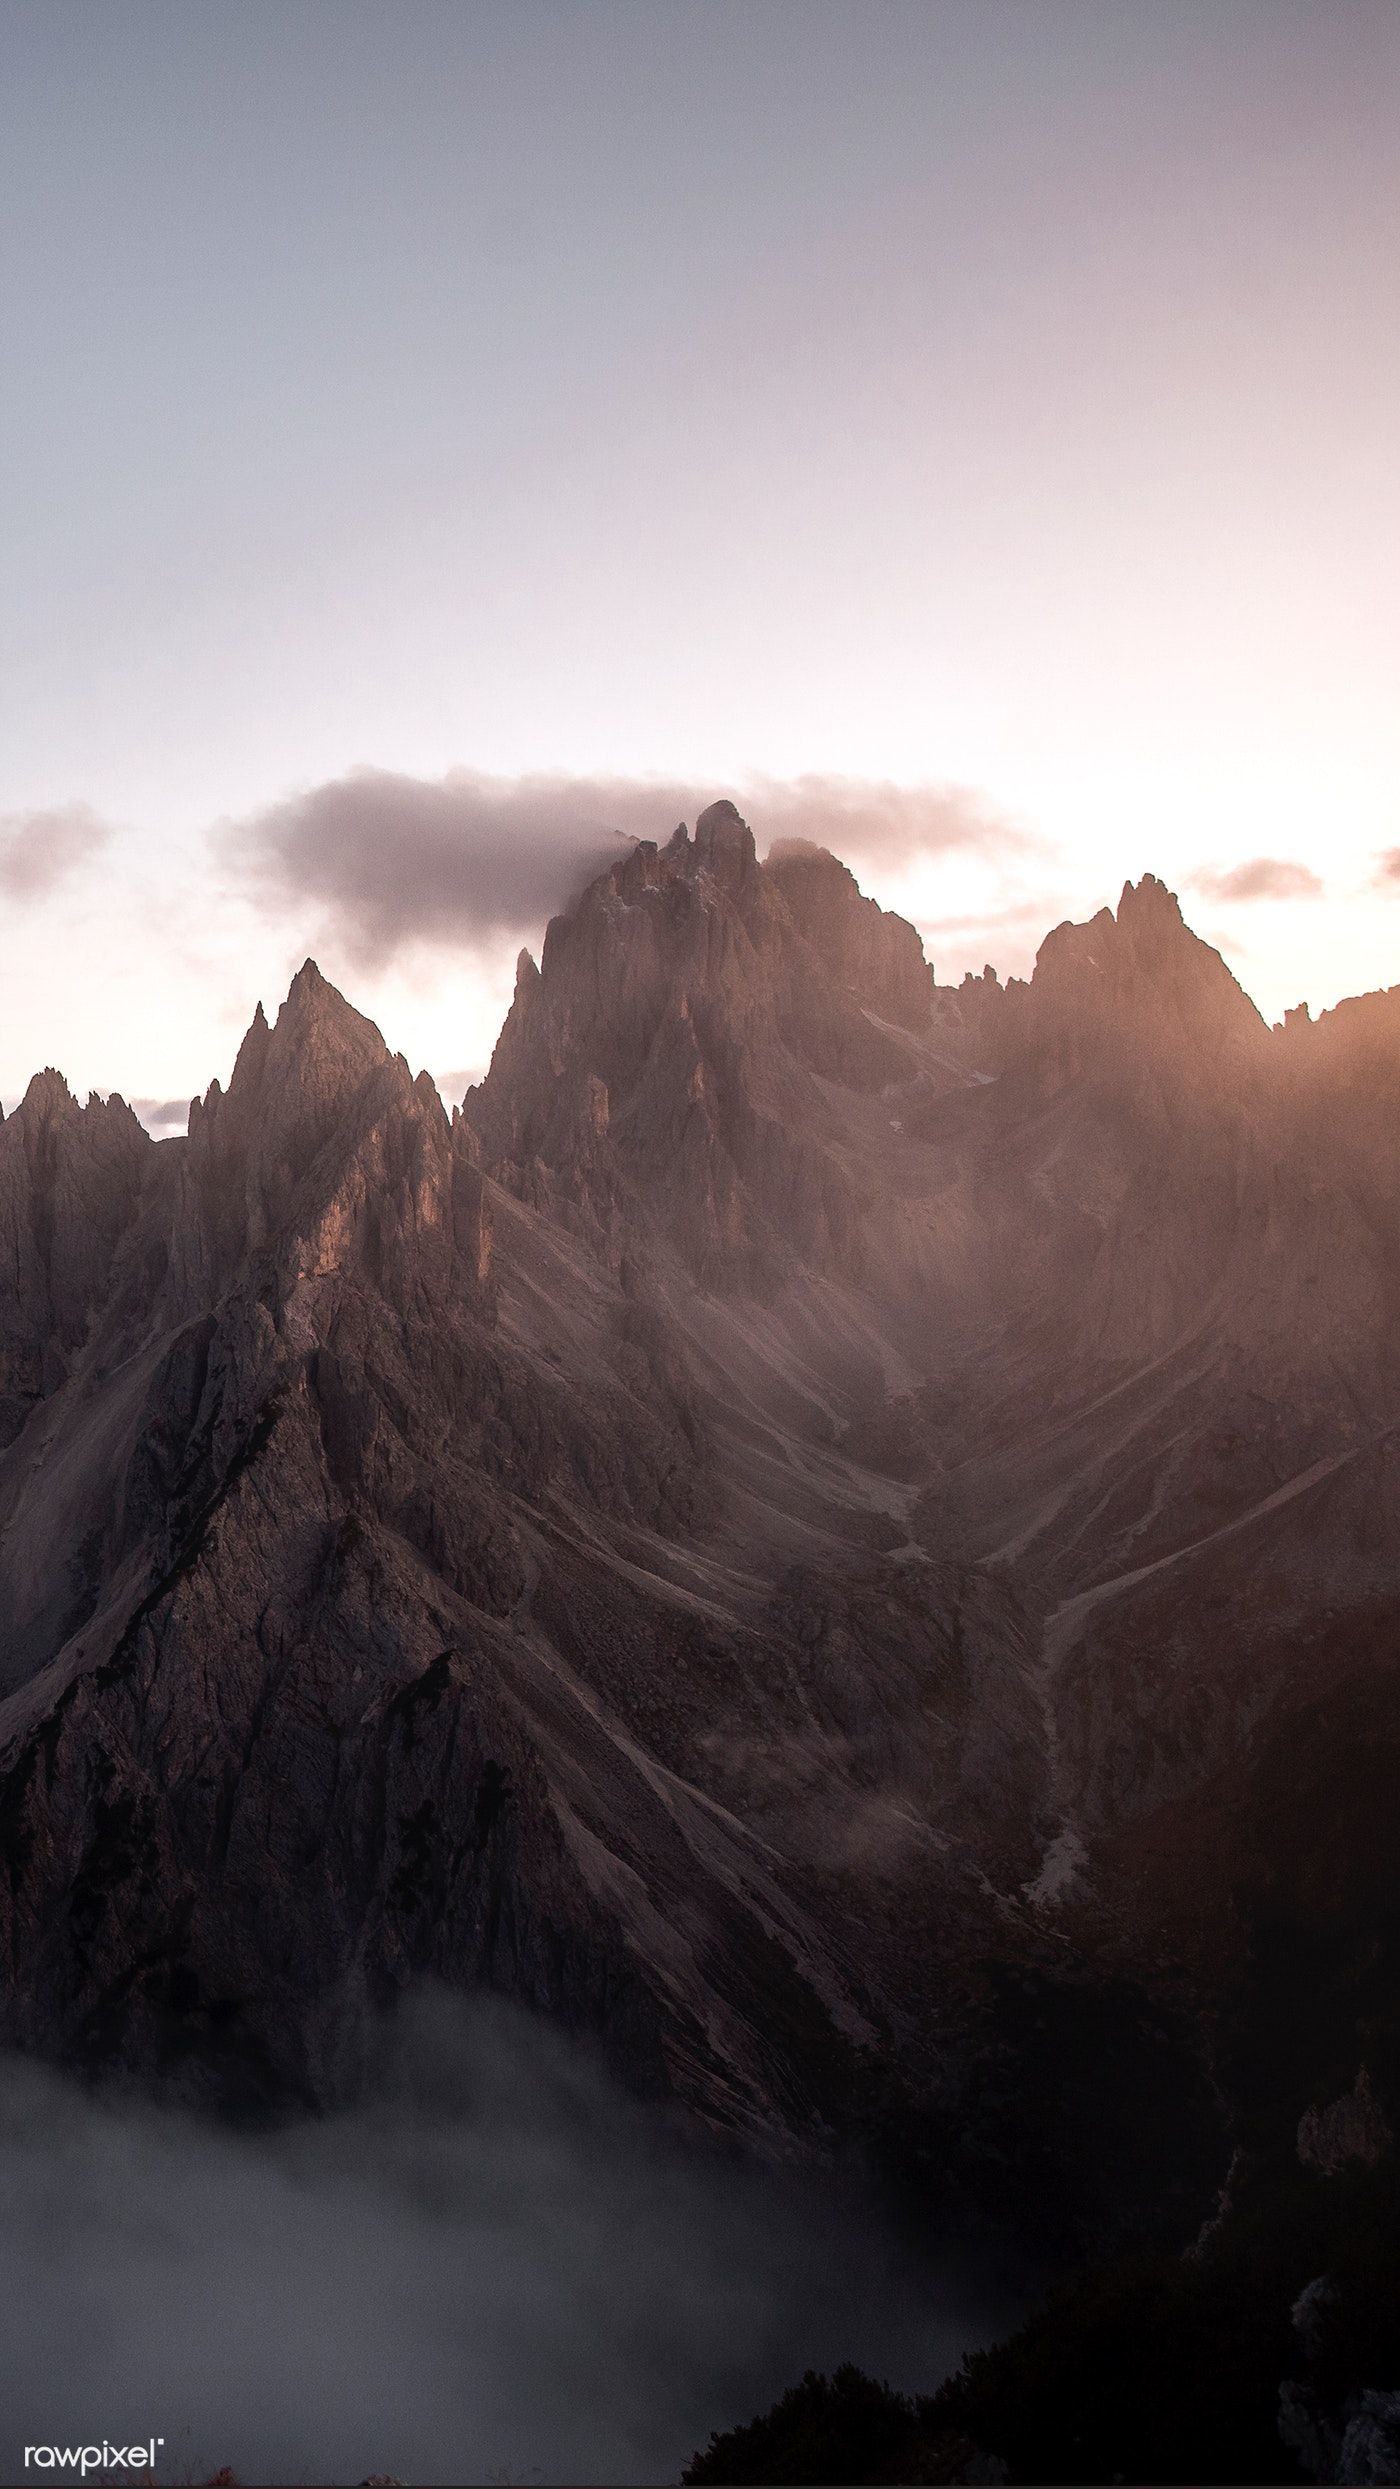 Download premium image of View of foggy Tre Cime di Lavaredo in Dolomites. Silhouette painting, Dolomites, Image